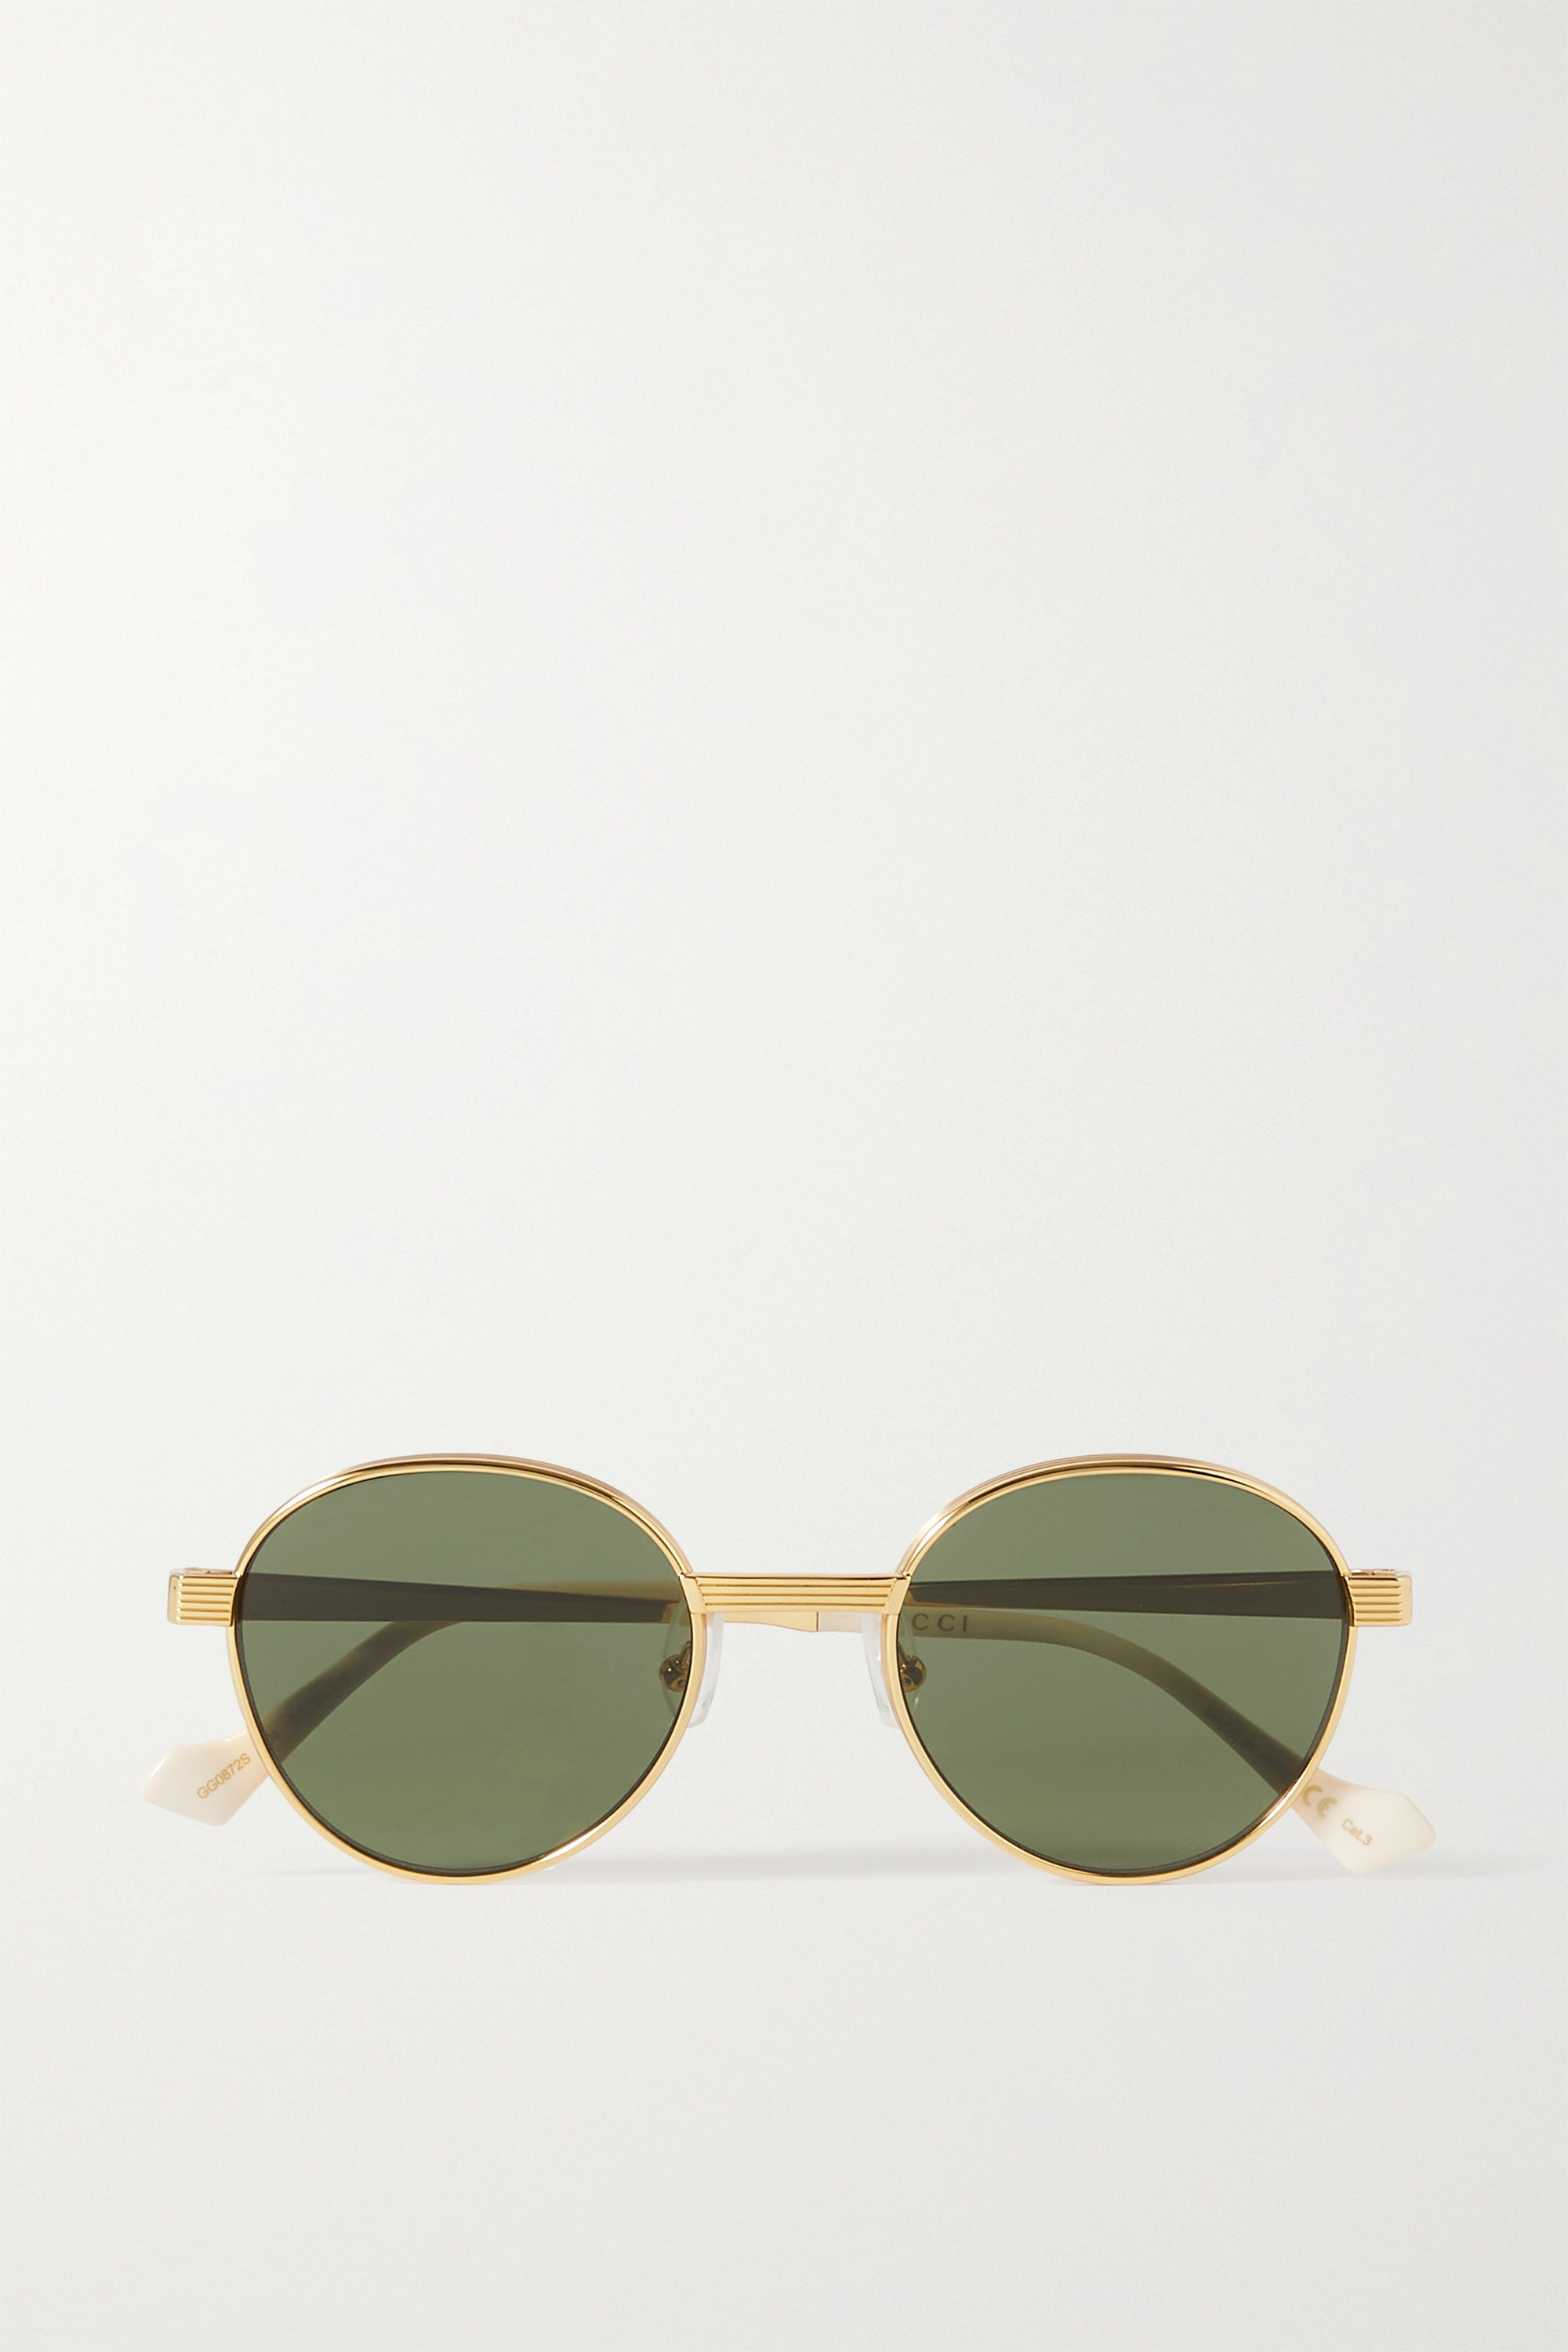 Gucci Round-Frame Gold-Tone Sunglasses